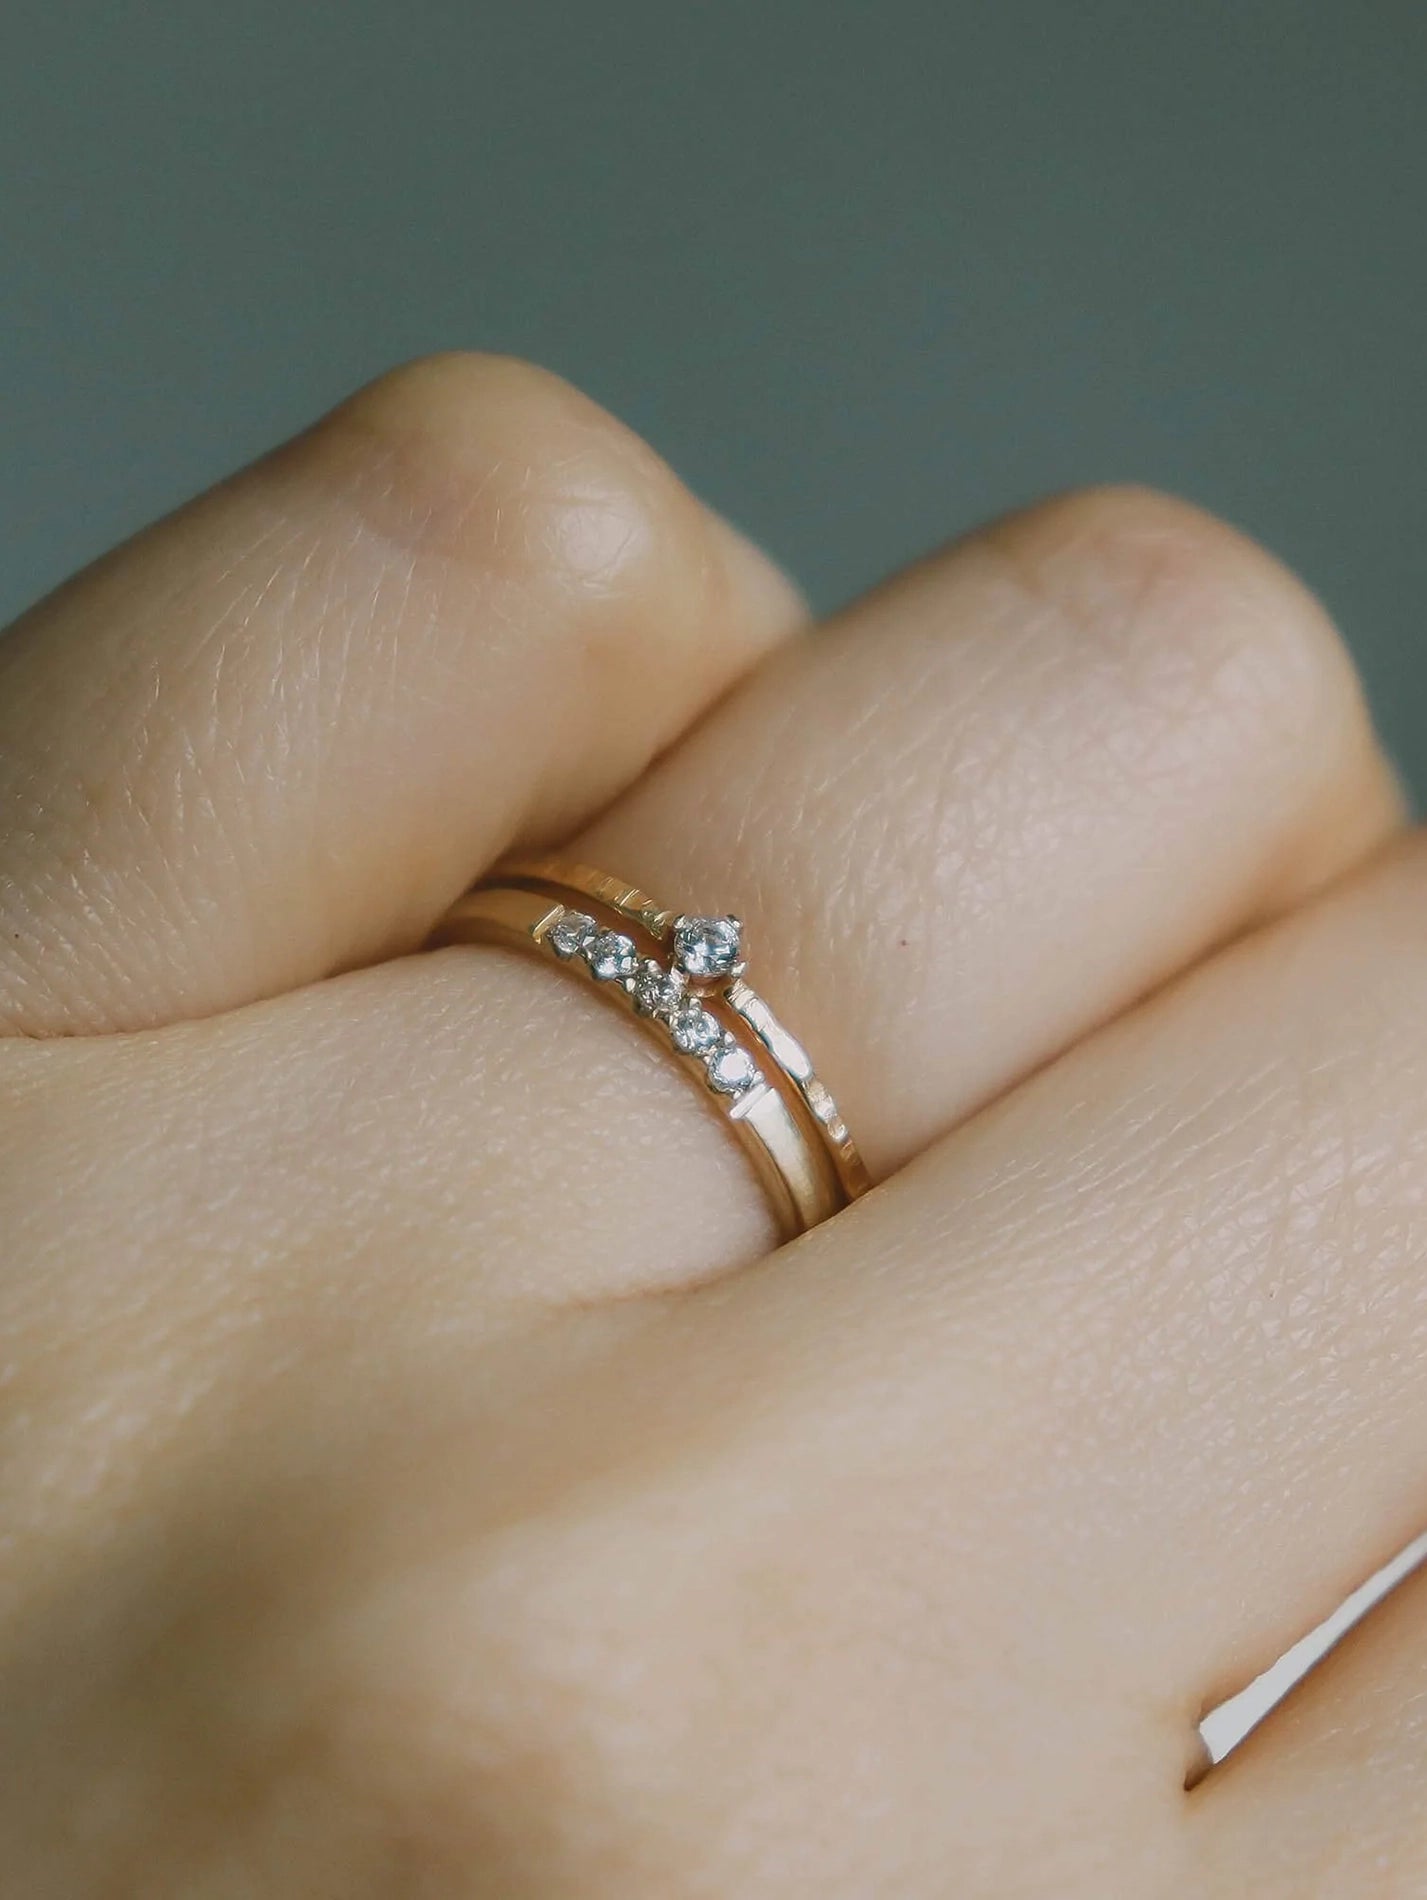 2.81 Carat Red Diamond Mens Ring, Unique Halo Wedding Ring 14K Black Gold  Handmade Certified